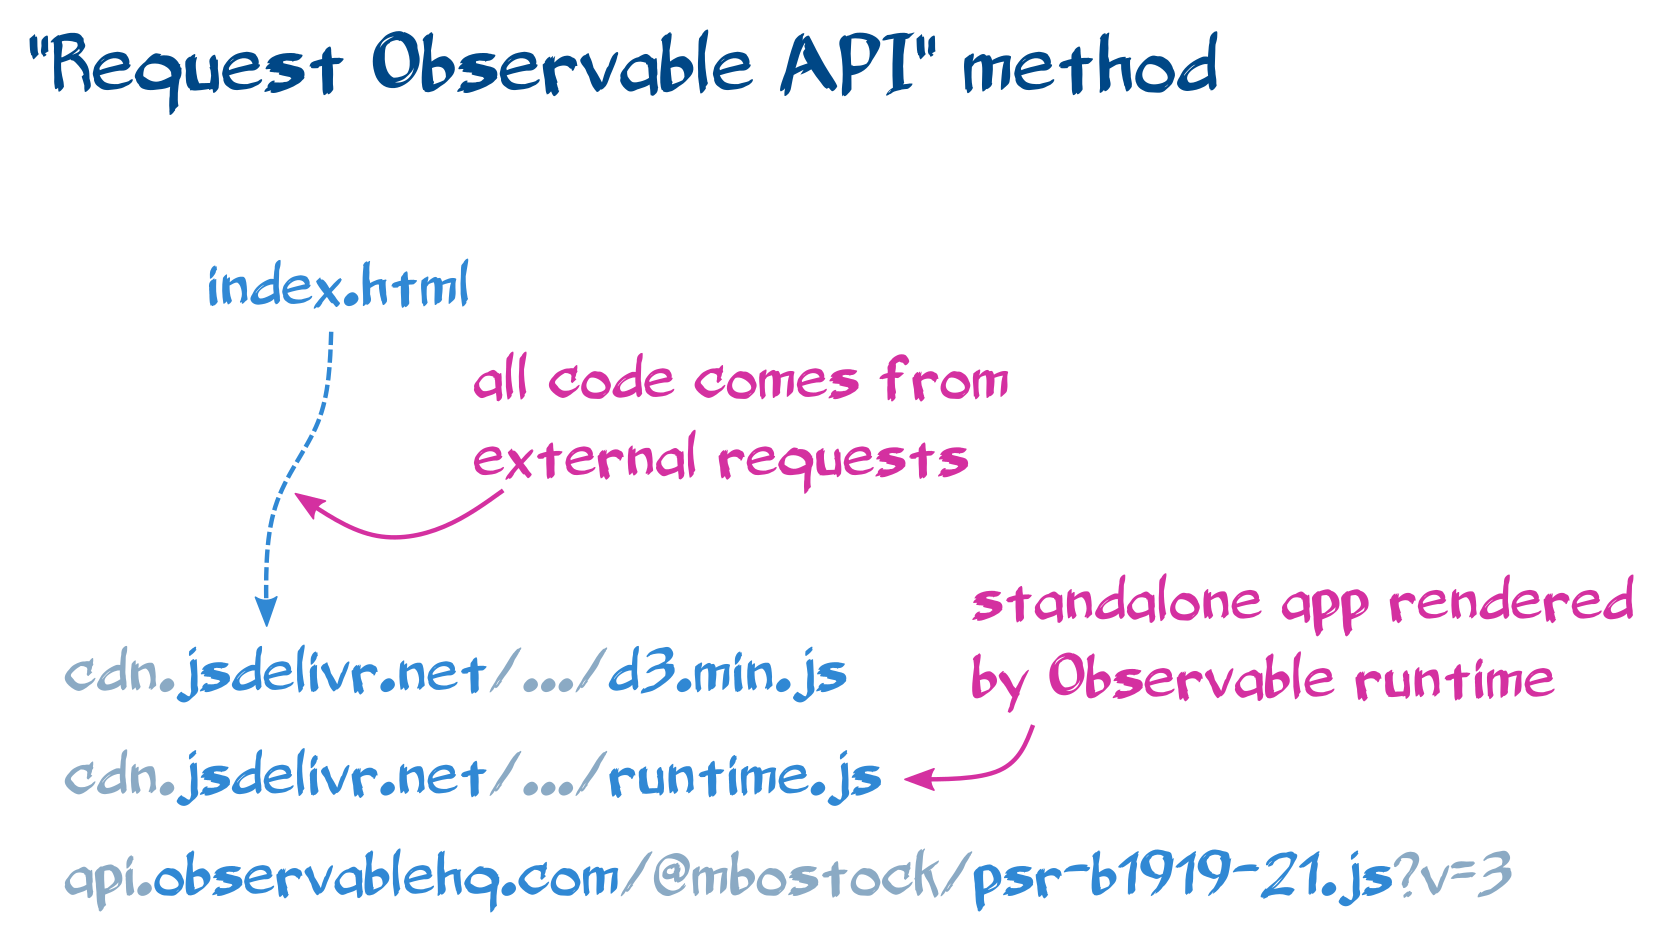 Diagram for the "Request Observable API" method